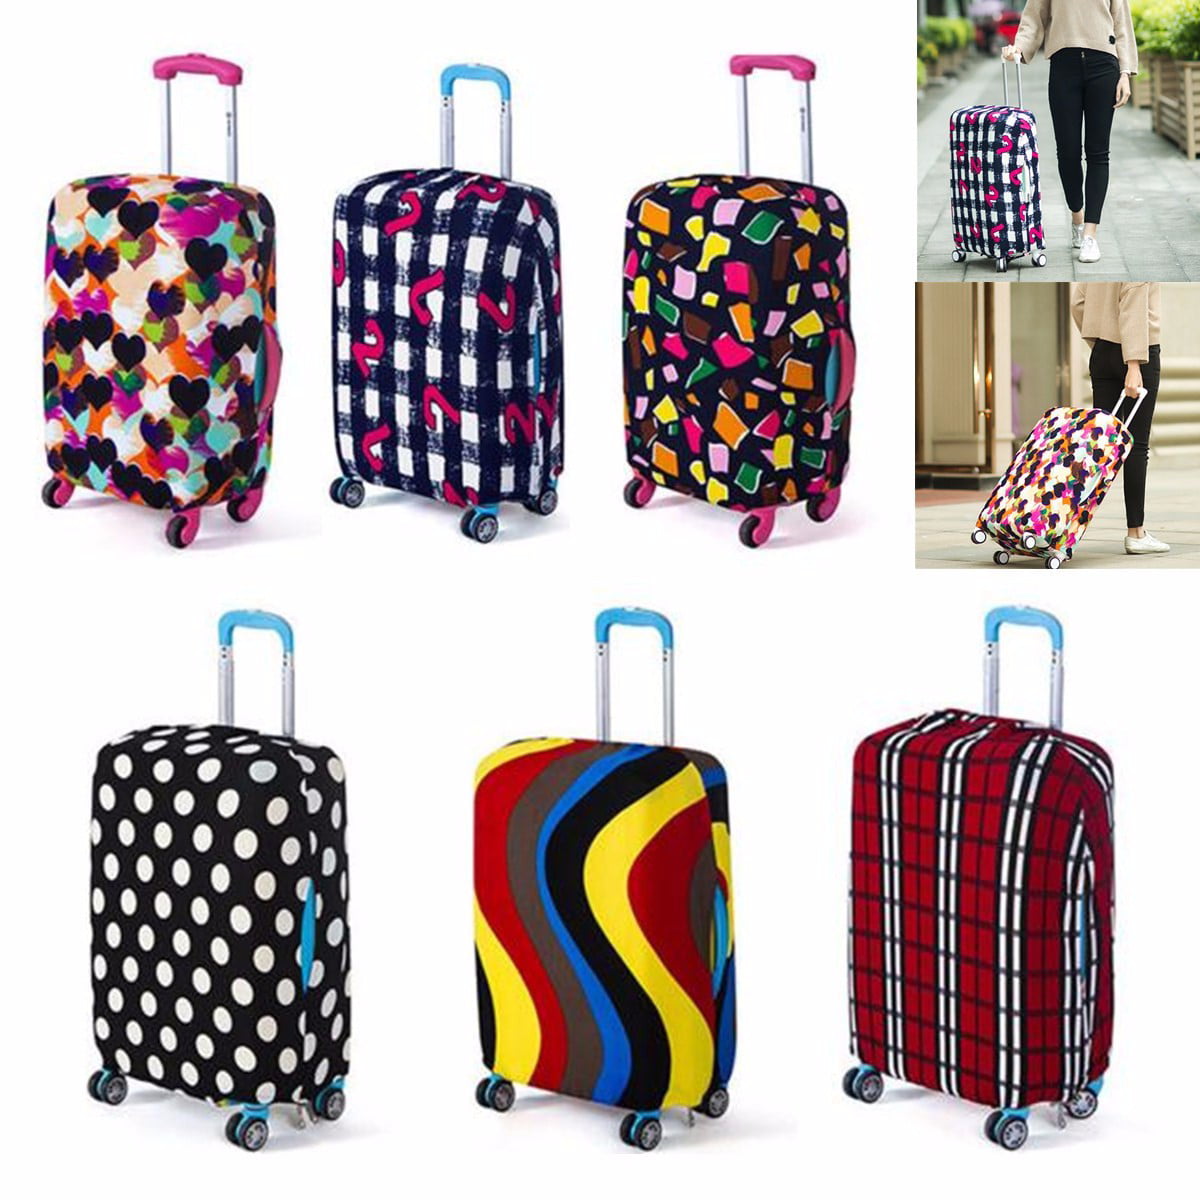 V.I.P. - Luggage Cover Protector,24'' Colorful Elastic Luggage Travel ...